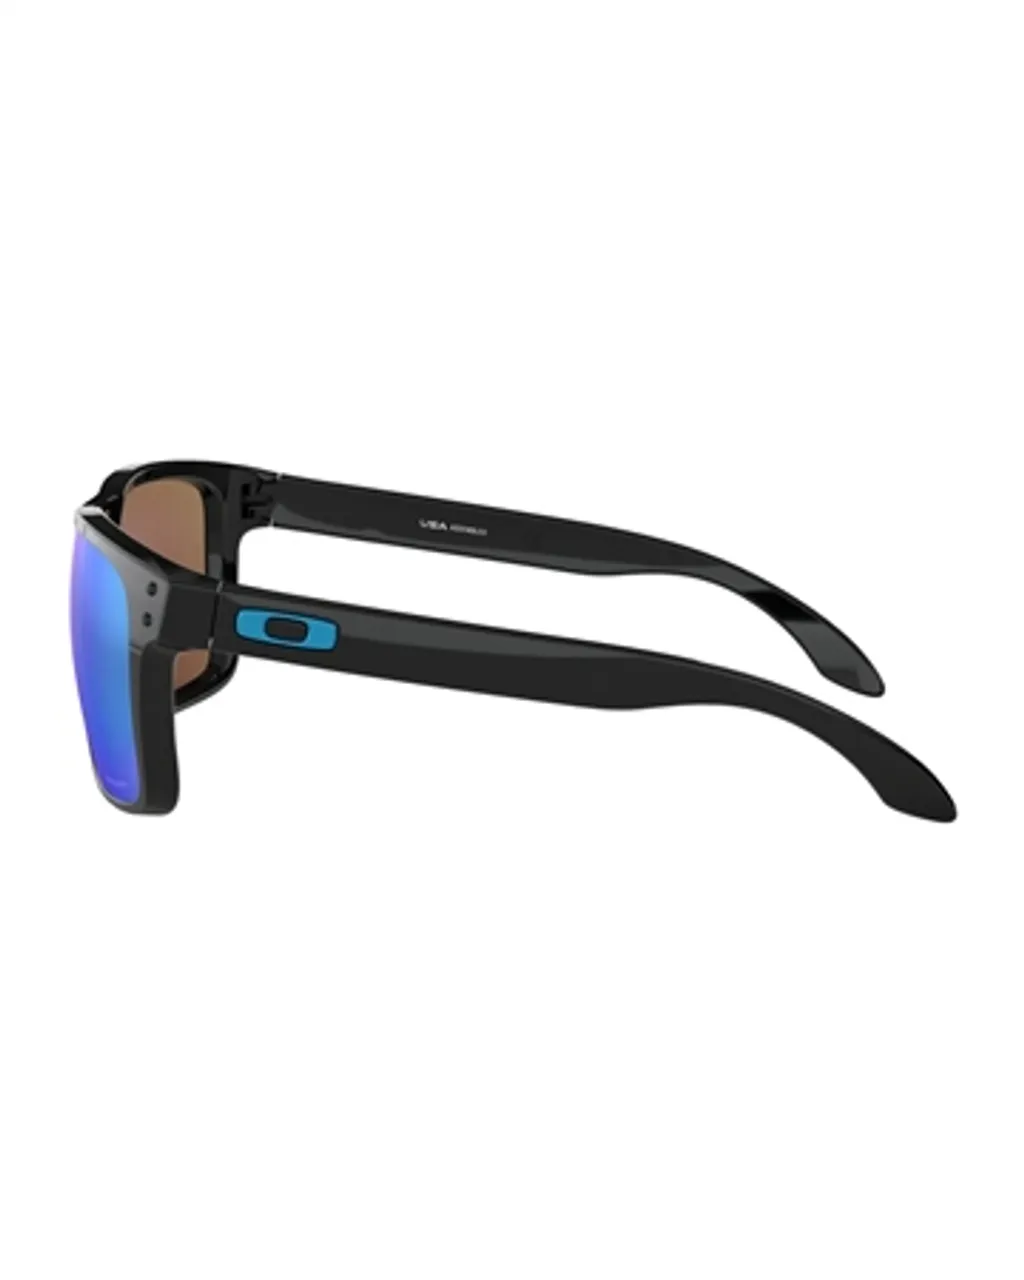 Oakley Holbrook XL Sunglasses - Polished Black